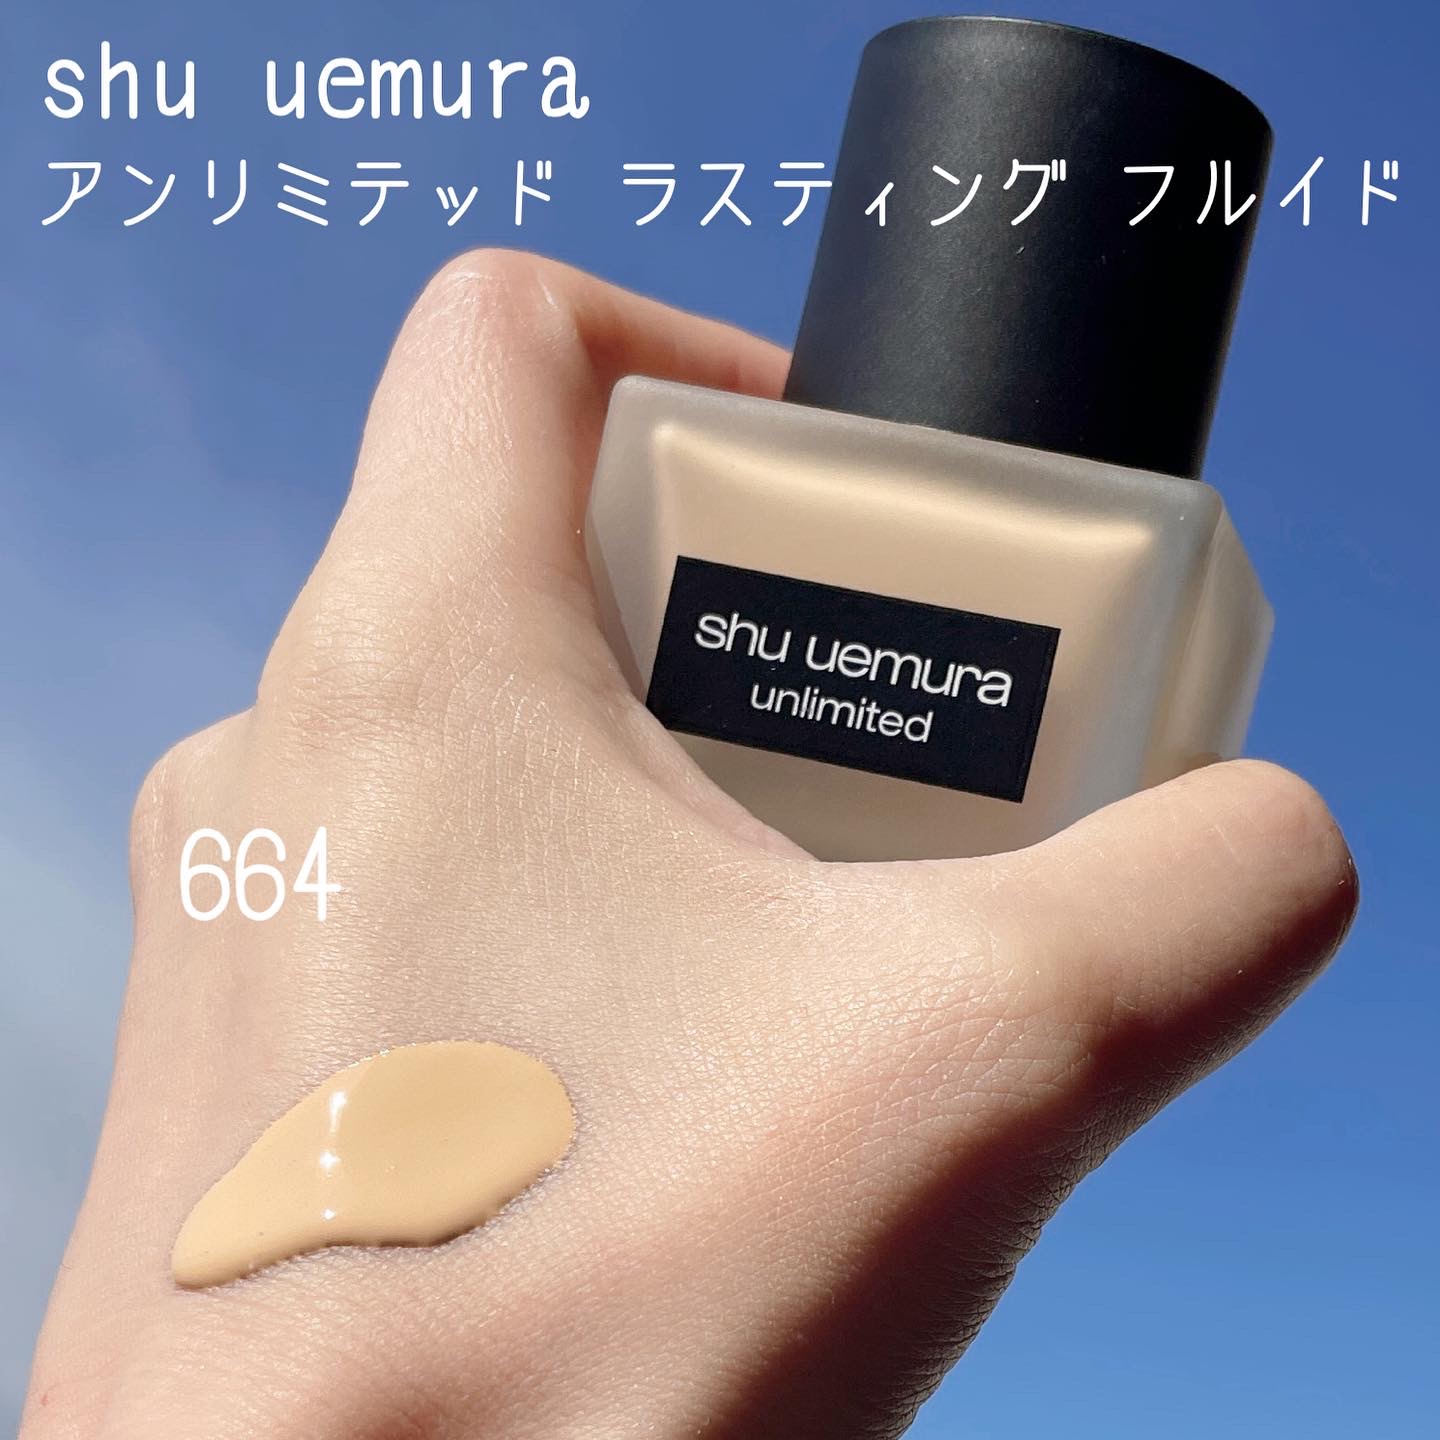 shu uemura(シュウ ウエムラ) アンリミテッド ラスティング フルイドの良い点・メリットに関するなゆさんの口コミ画像2